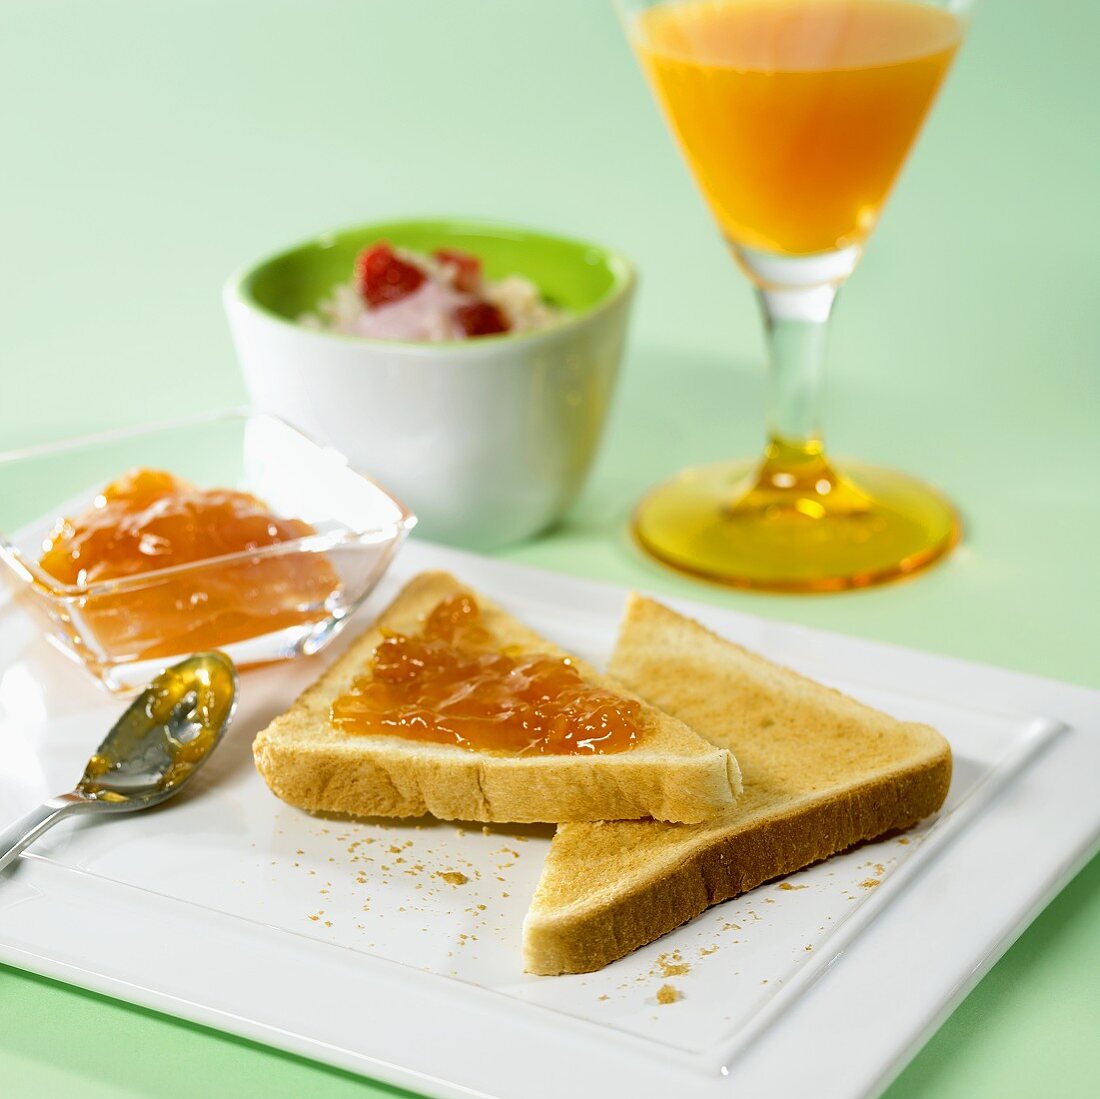 Toast and jam, porridge and orange juice